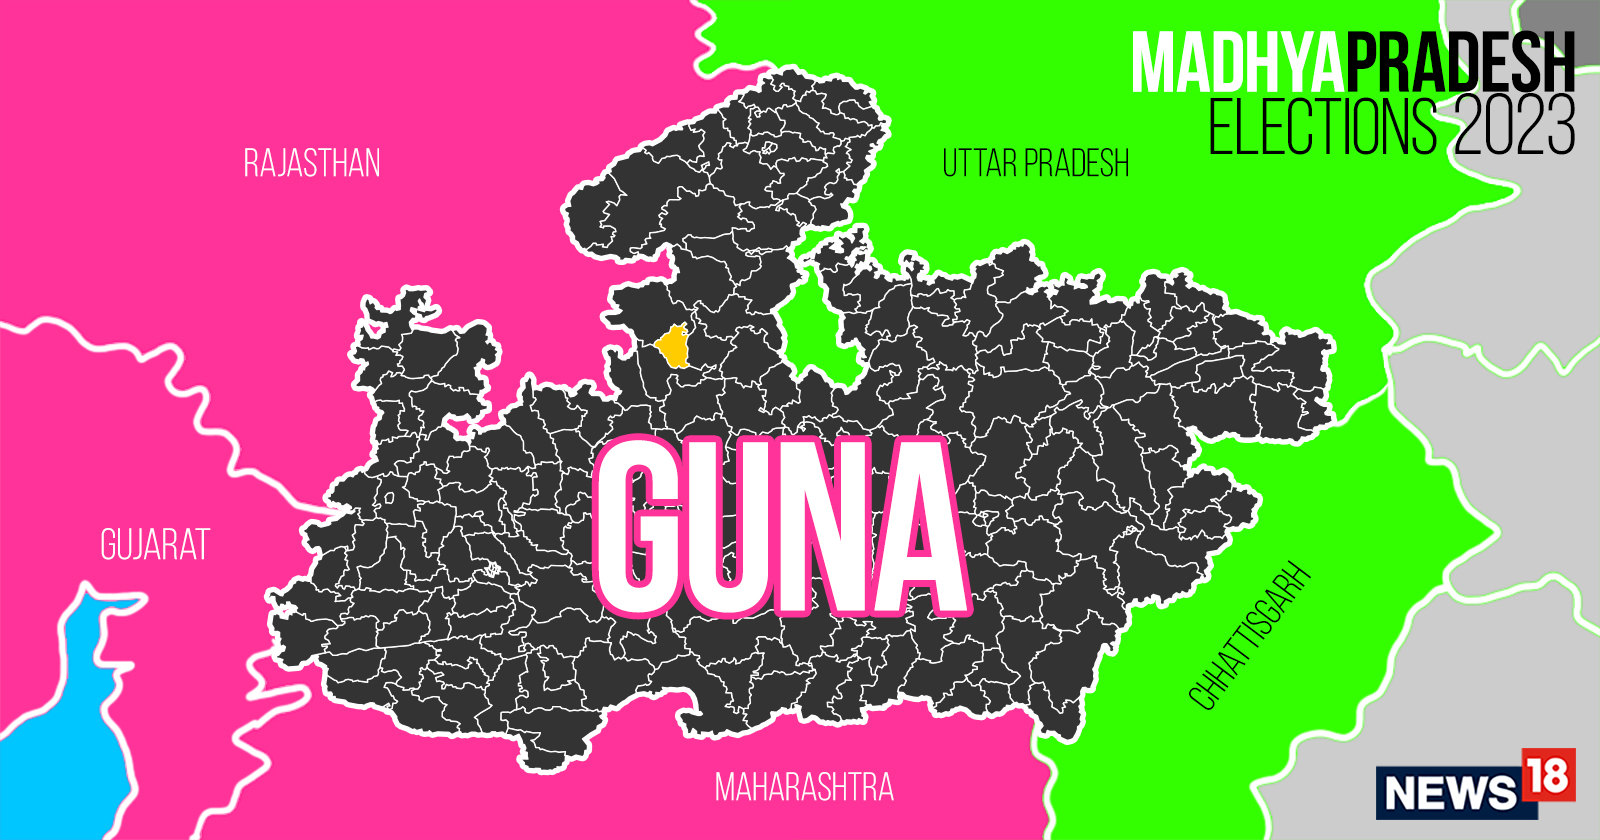 Guna (Scheduled Caste) Assembly constituency in Madhya Pradesh